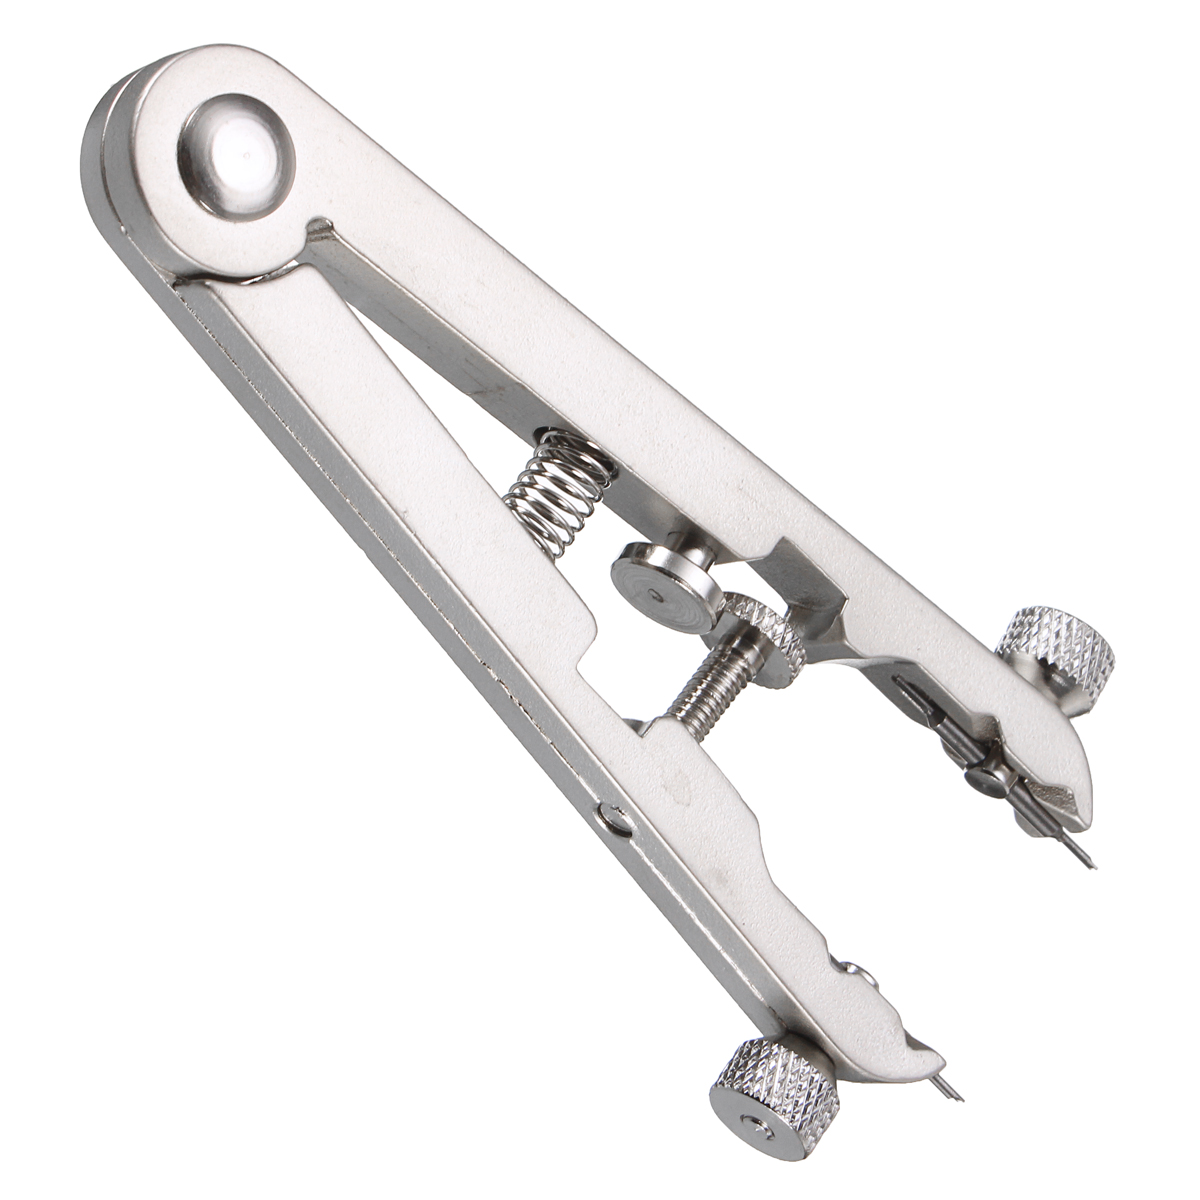 Bracelet-Spring-Bar-Remover-Watch-Tweezer-Strip-Replace-Tool-For-ROLEX-6825-1183855-3